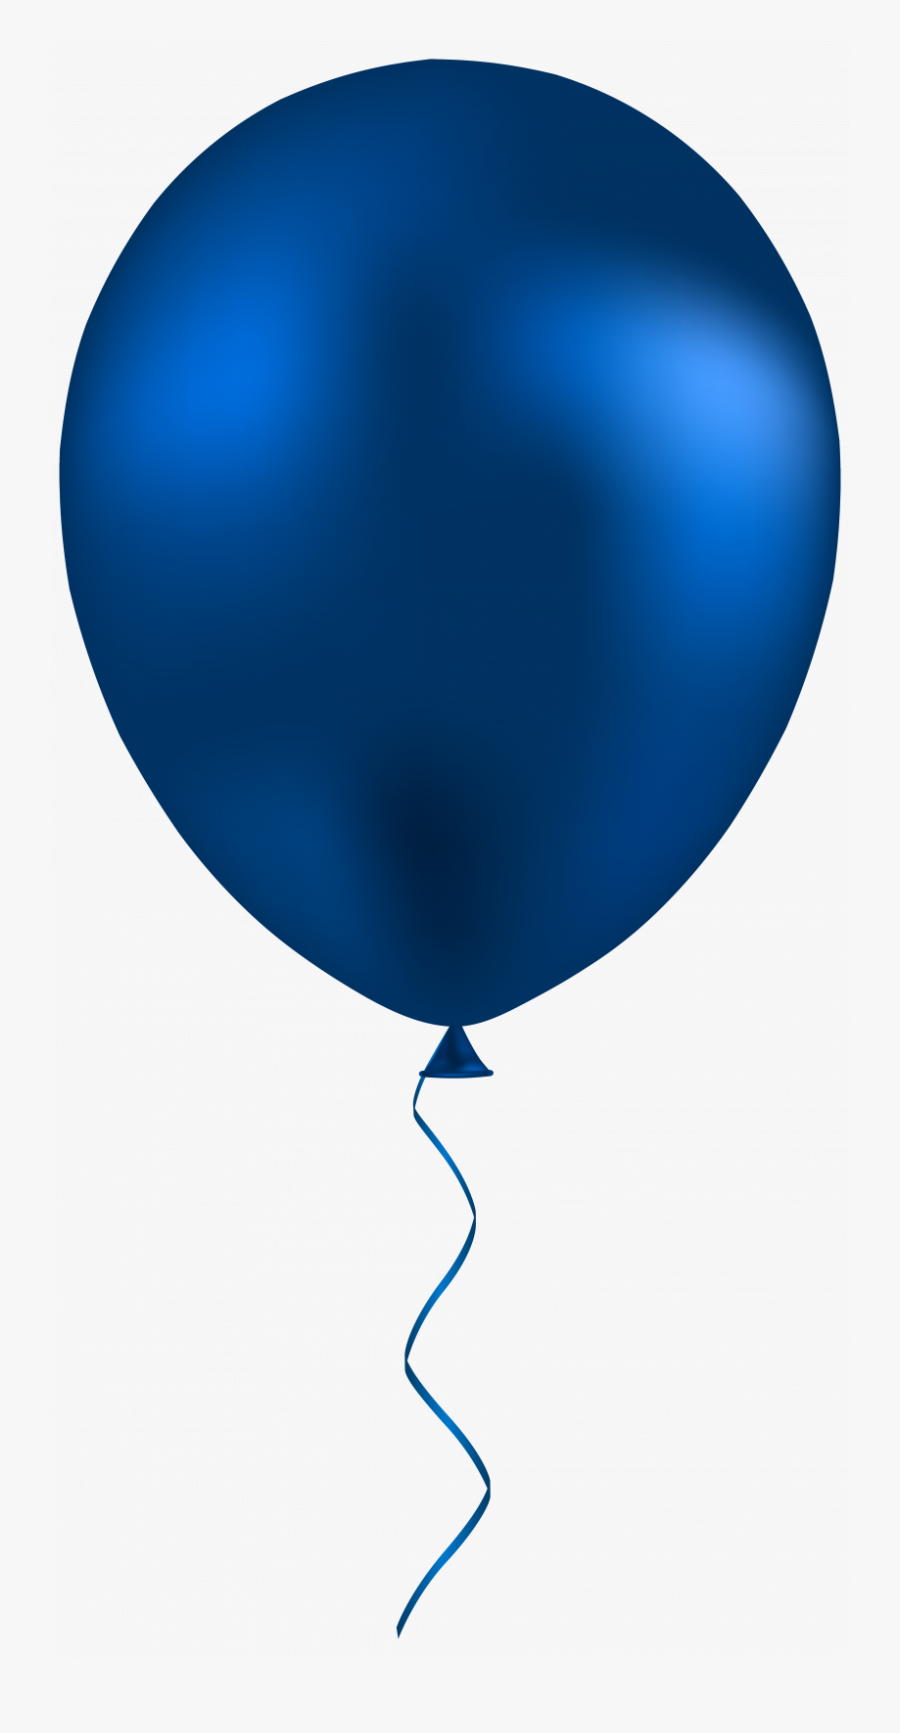 Balloon Free Jokingart Com - Transparent Background Balloons Png, Transparent Clipart